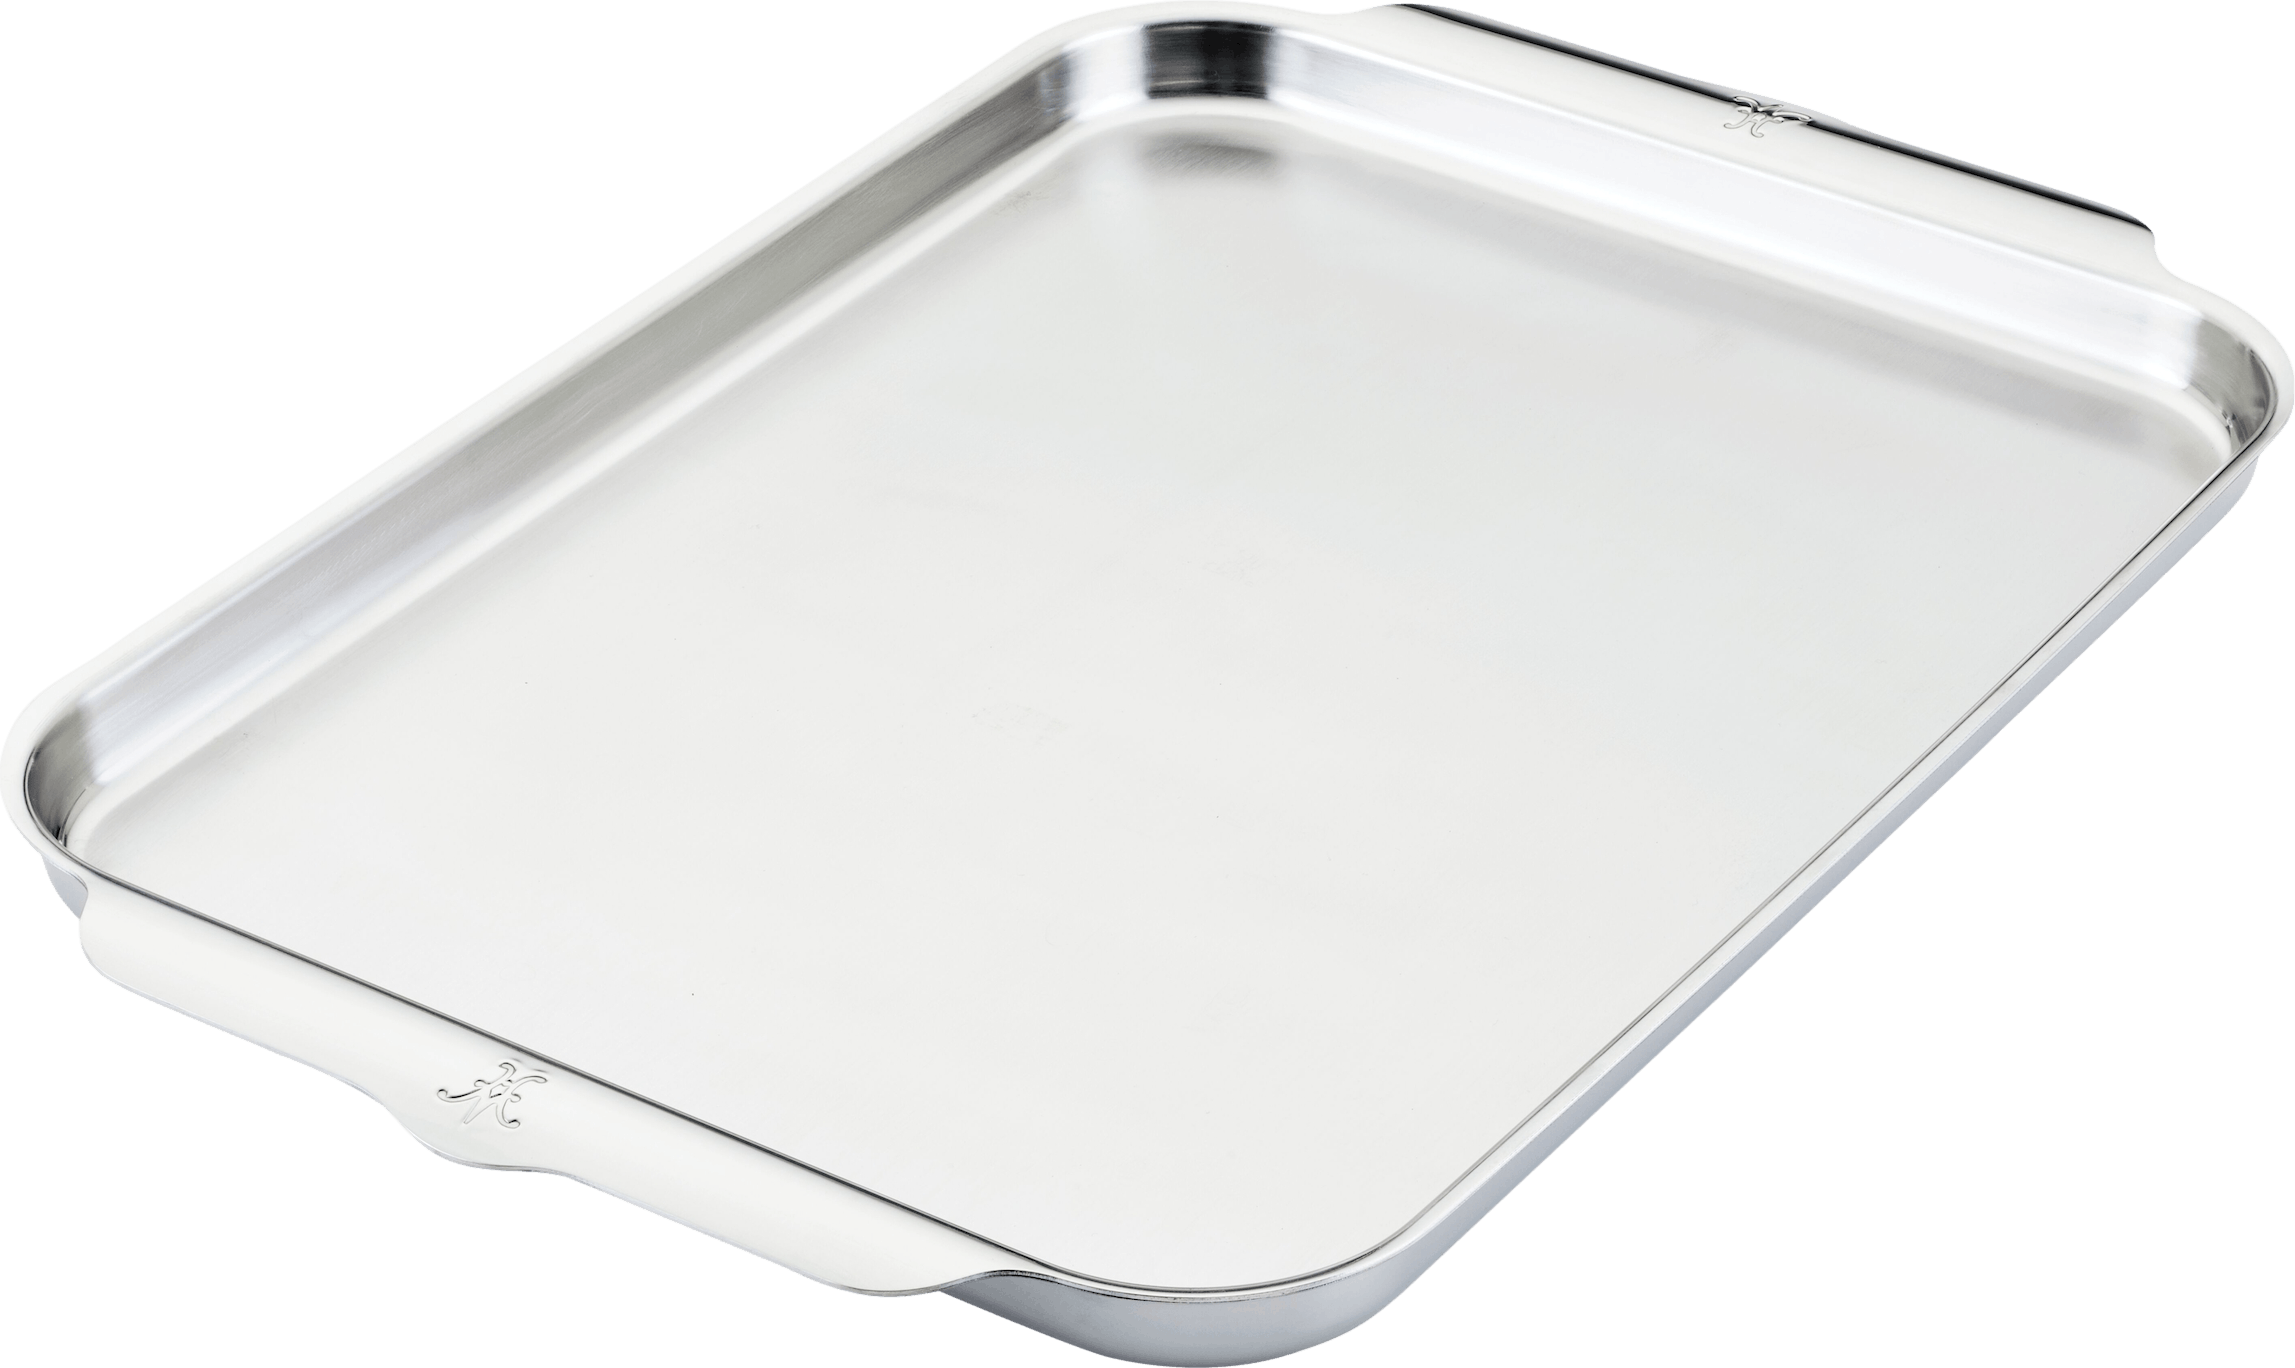 Hestan Provisions OvenBond Tri-Ply 18 Half Sheet Pan